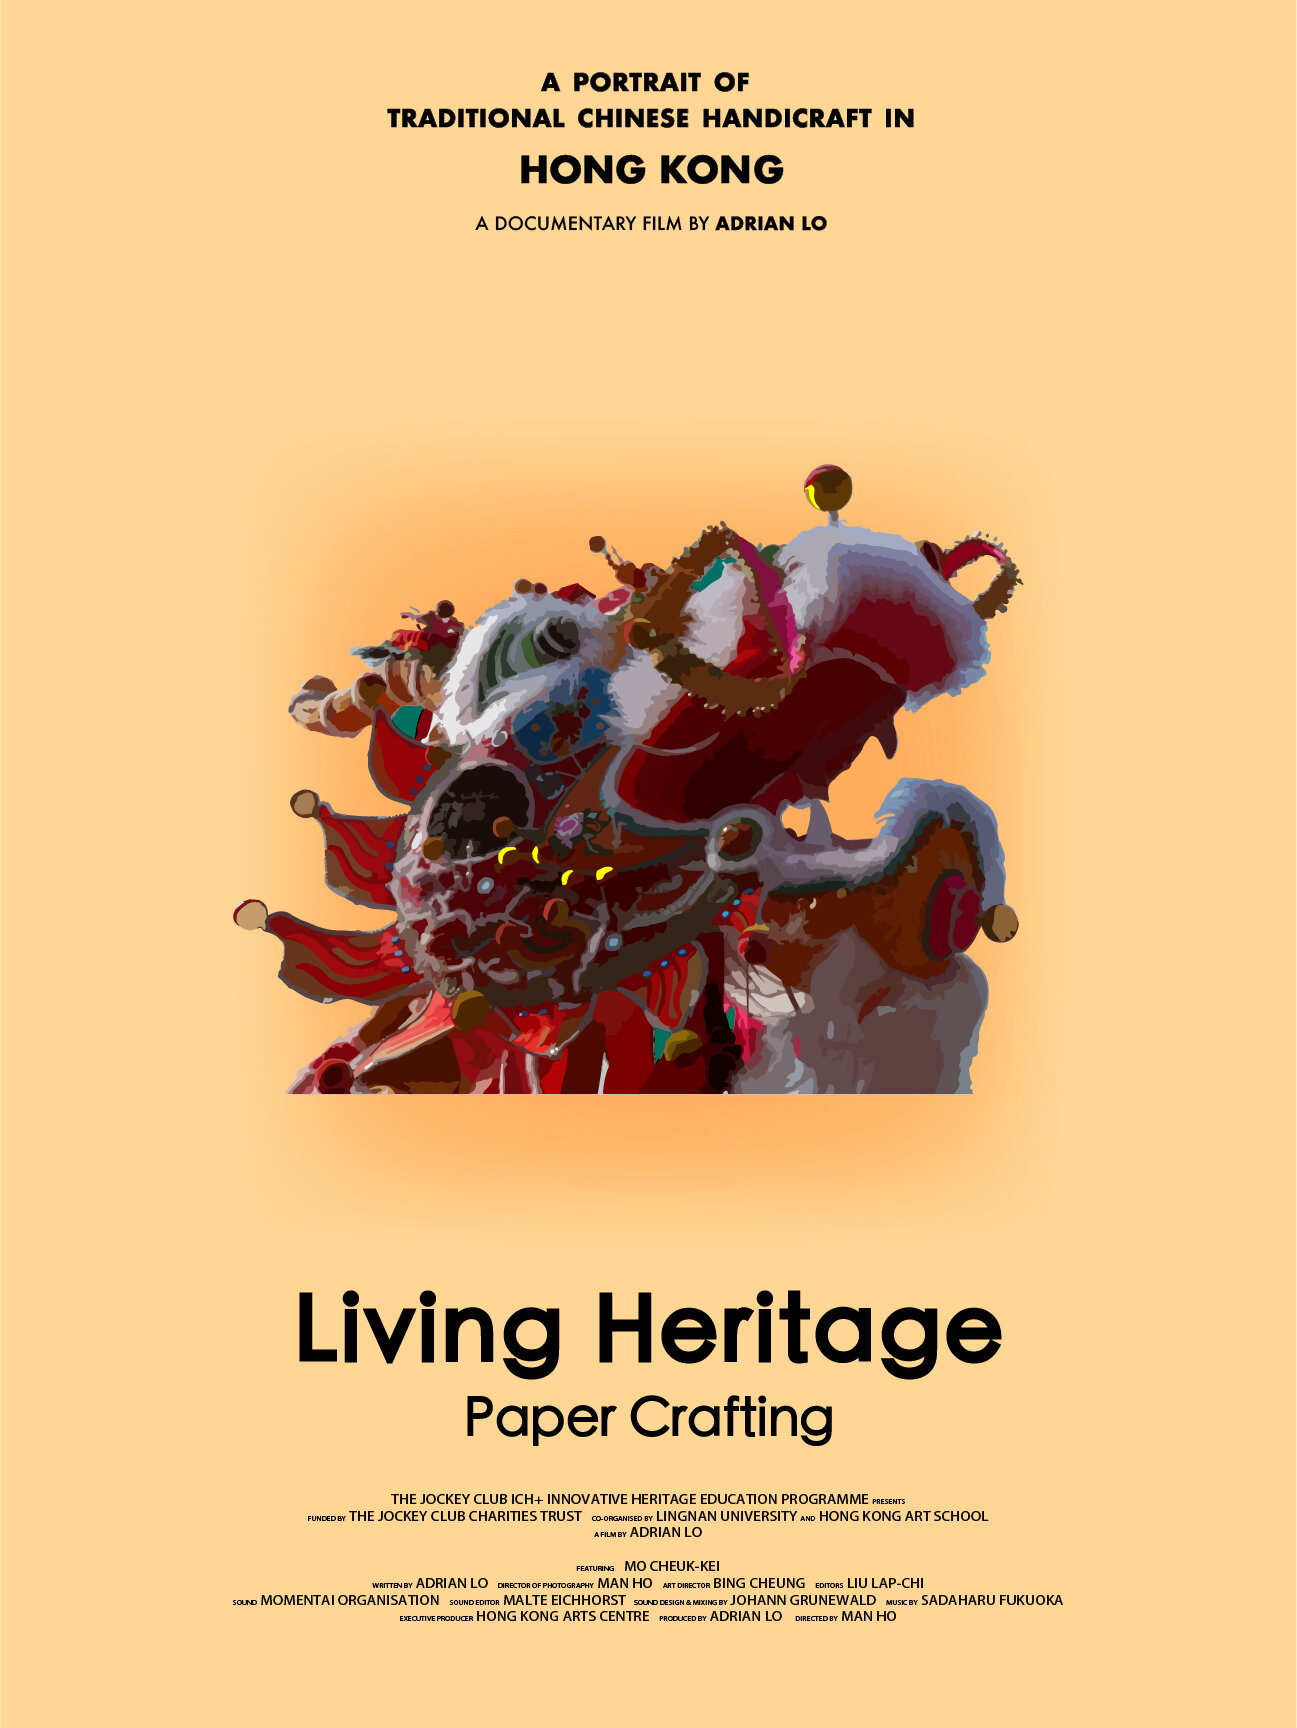 LivingHeritage_Poster_02_Crafting.jpg